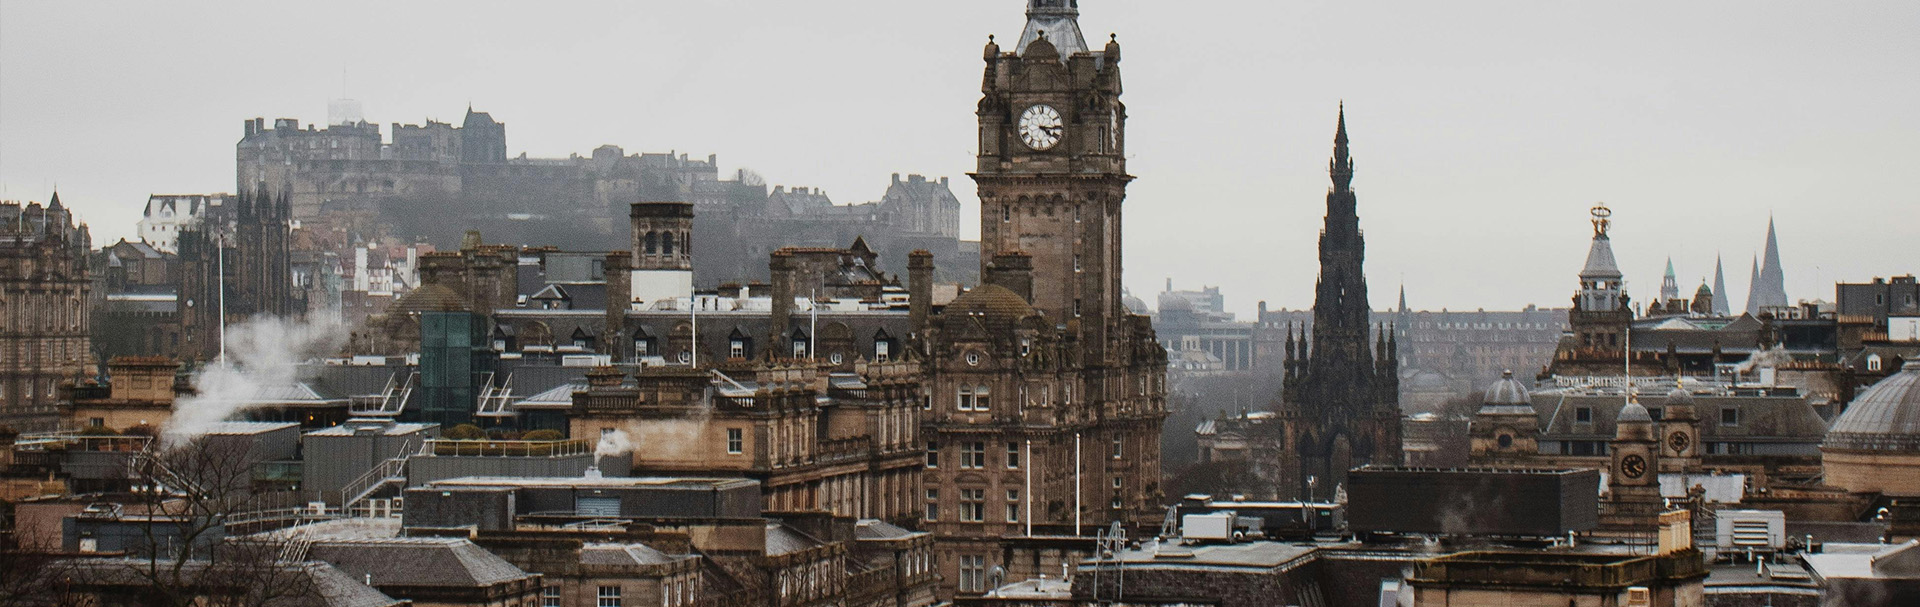 Edinburgh's Old Town